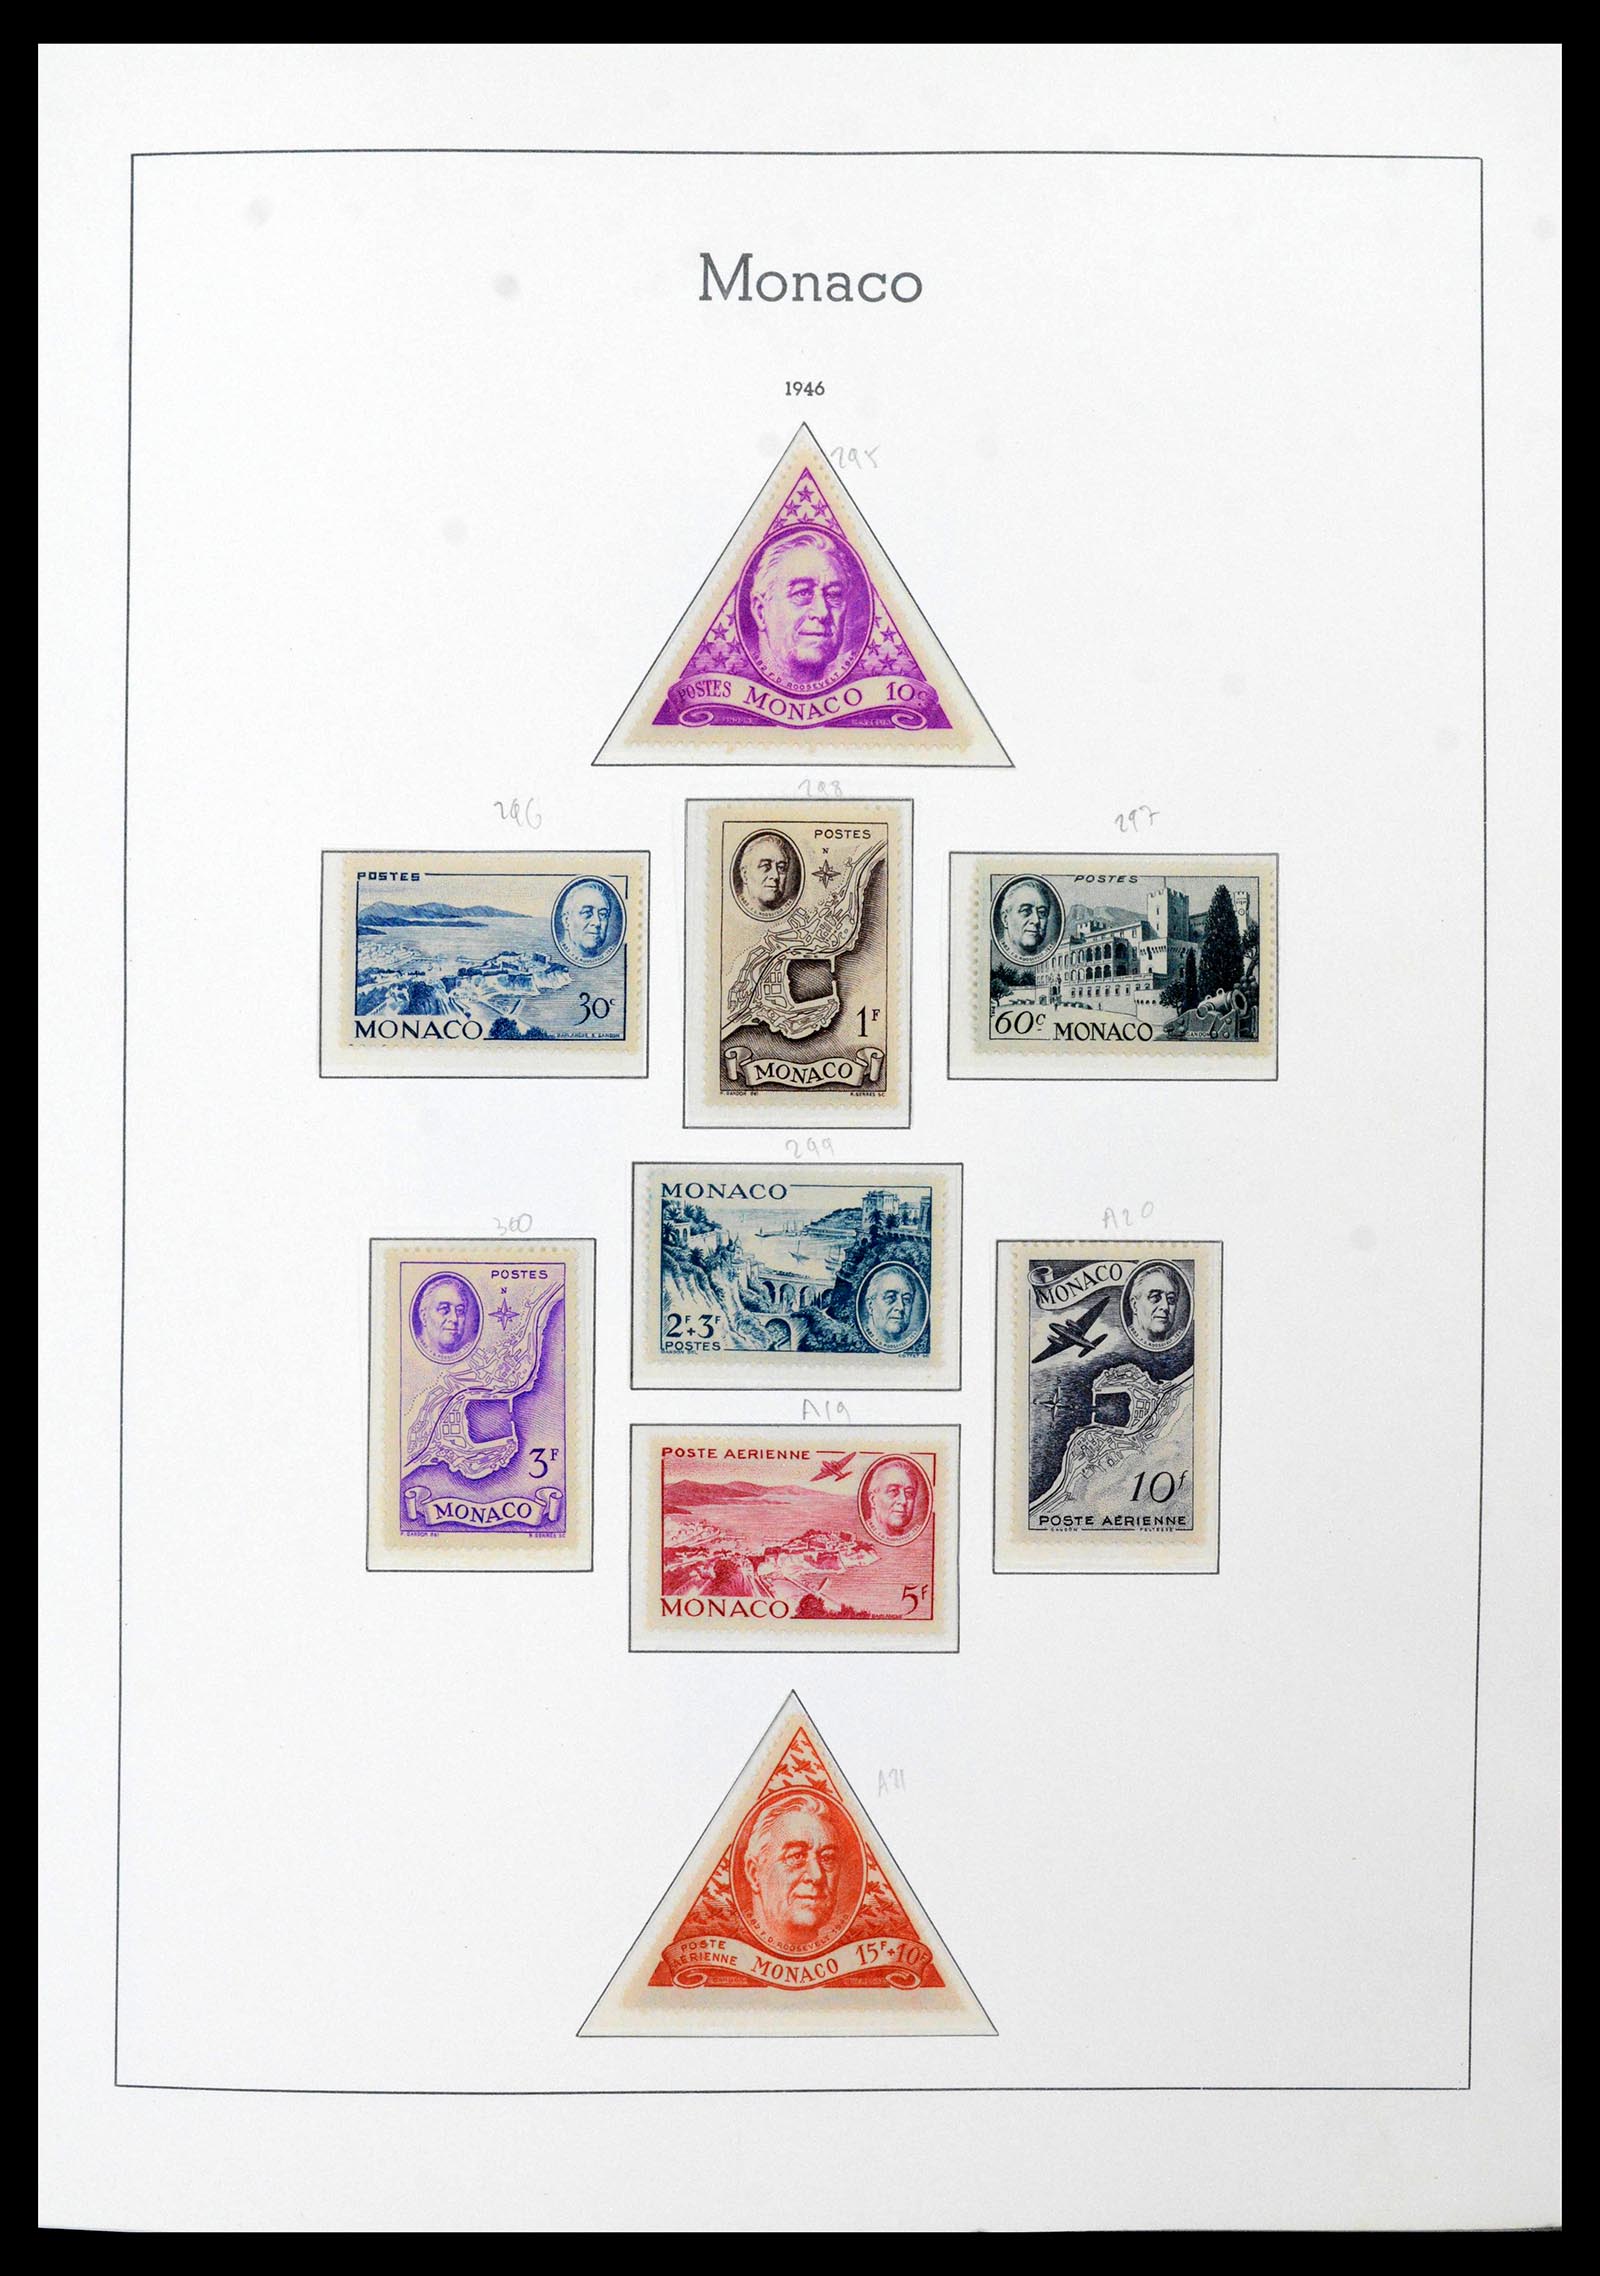 39250 0028 - Stamp collection 39250 Monaco 1885-1995.